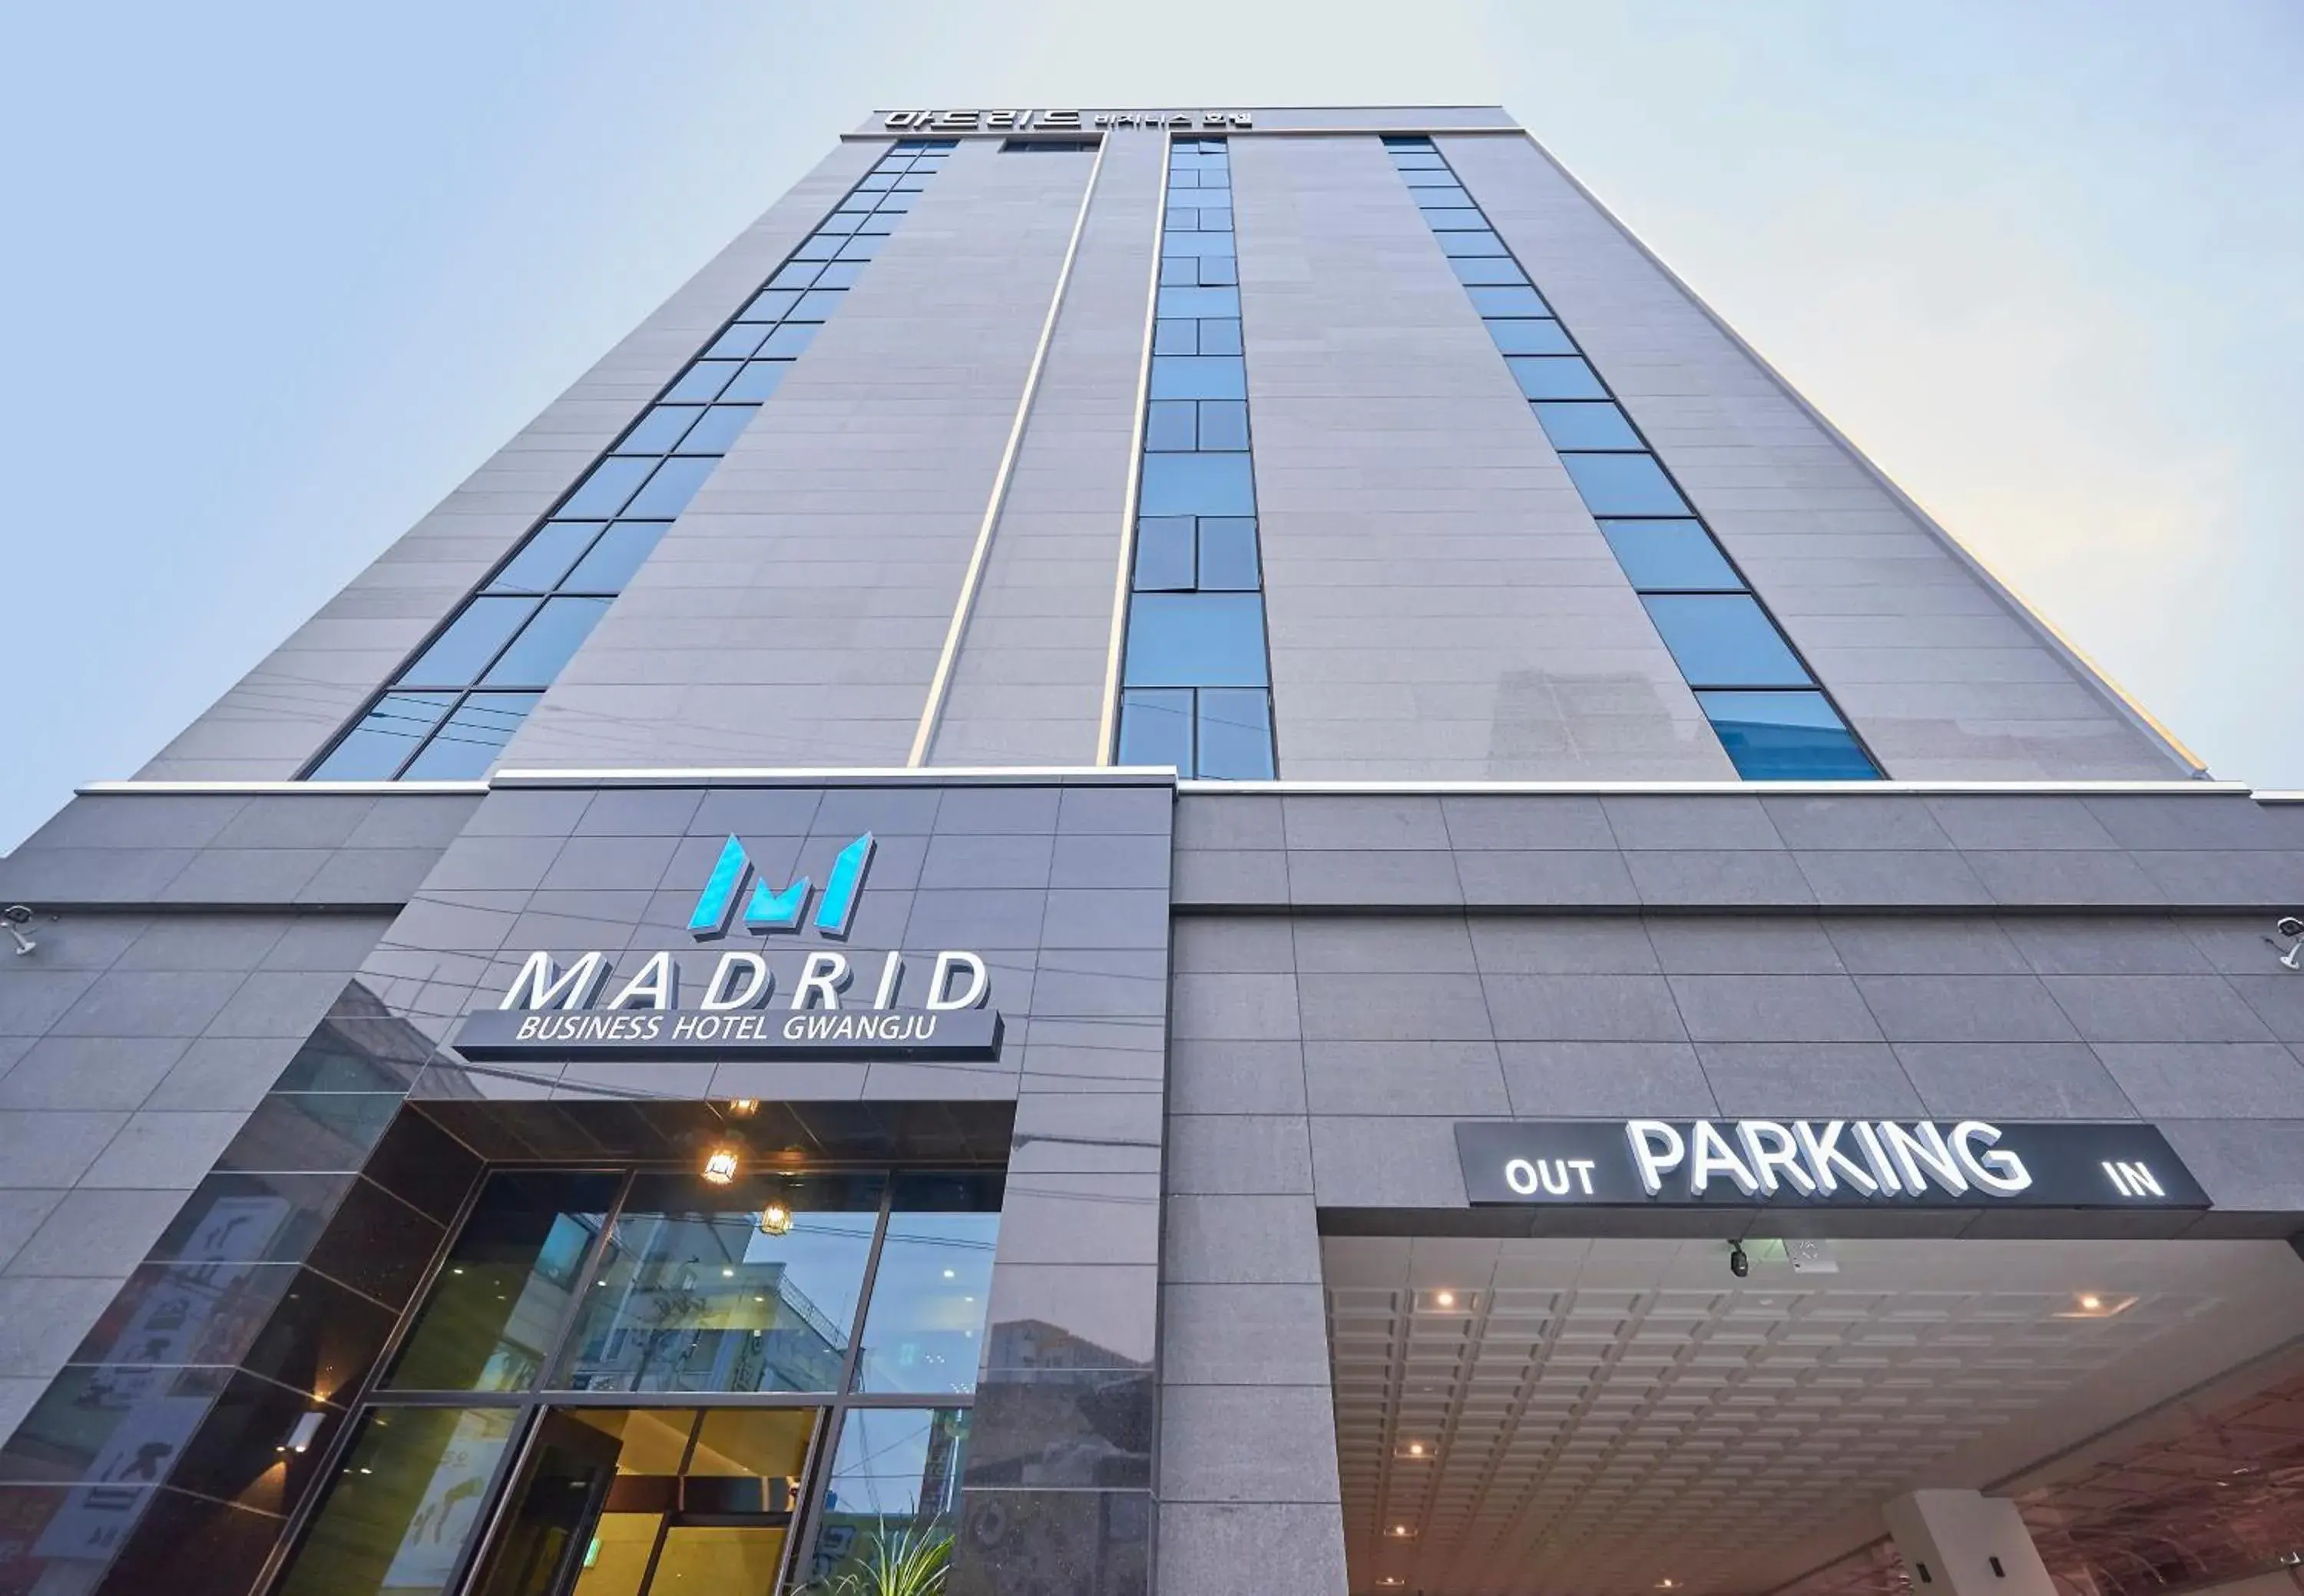 Property building in Gwangju Madrid Hotel (Korea Quality)